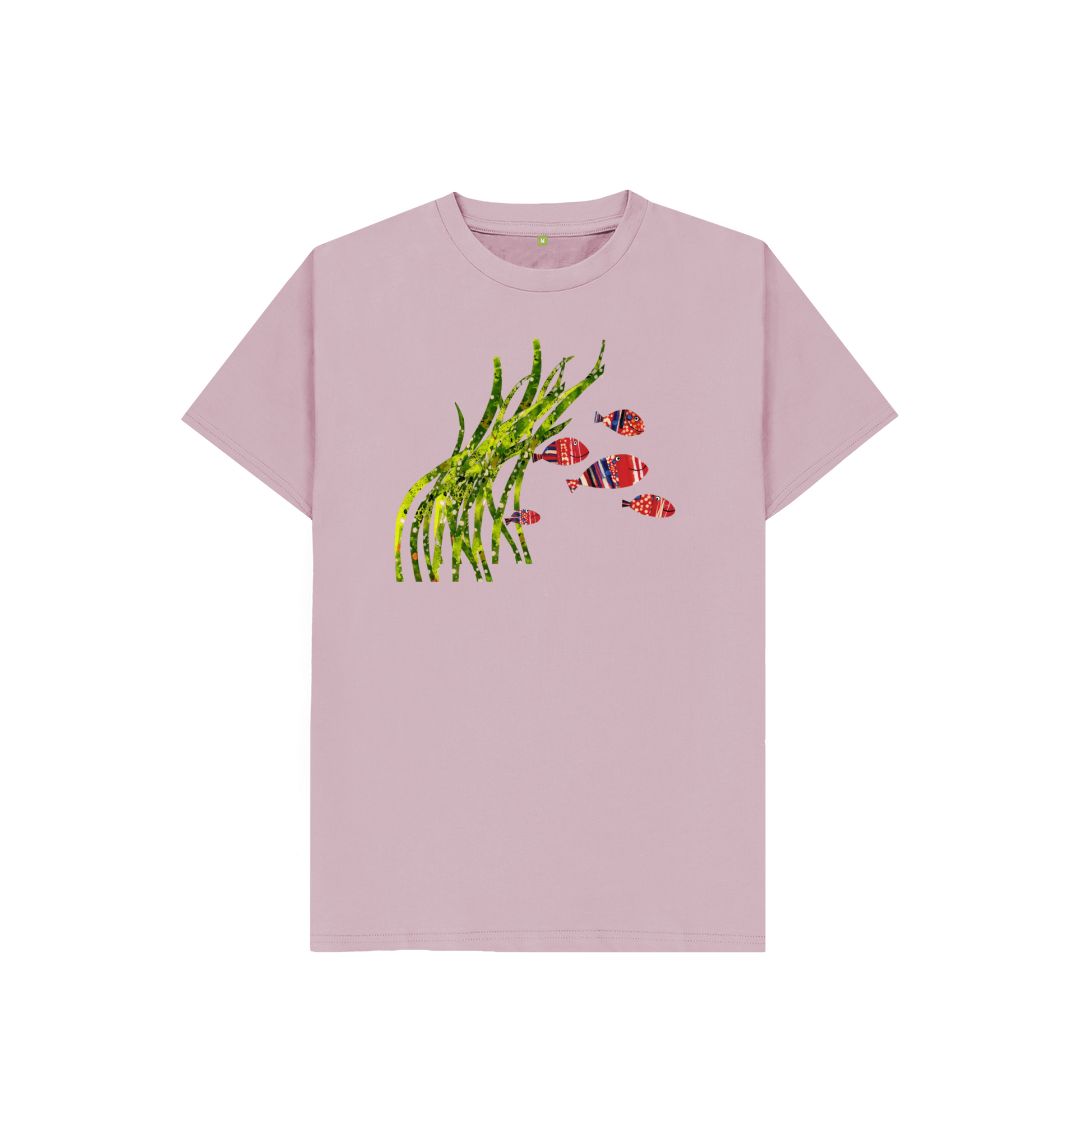 shoal days organic kid's tee - Printed Kids T-Shirt - Sarah Millin